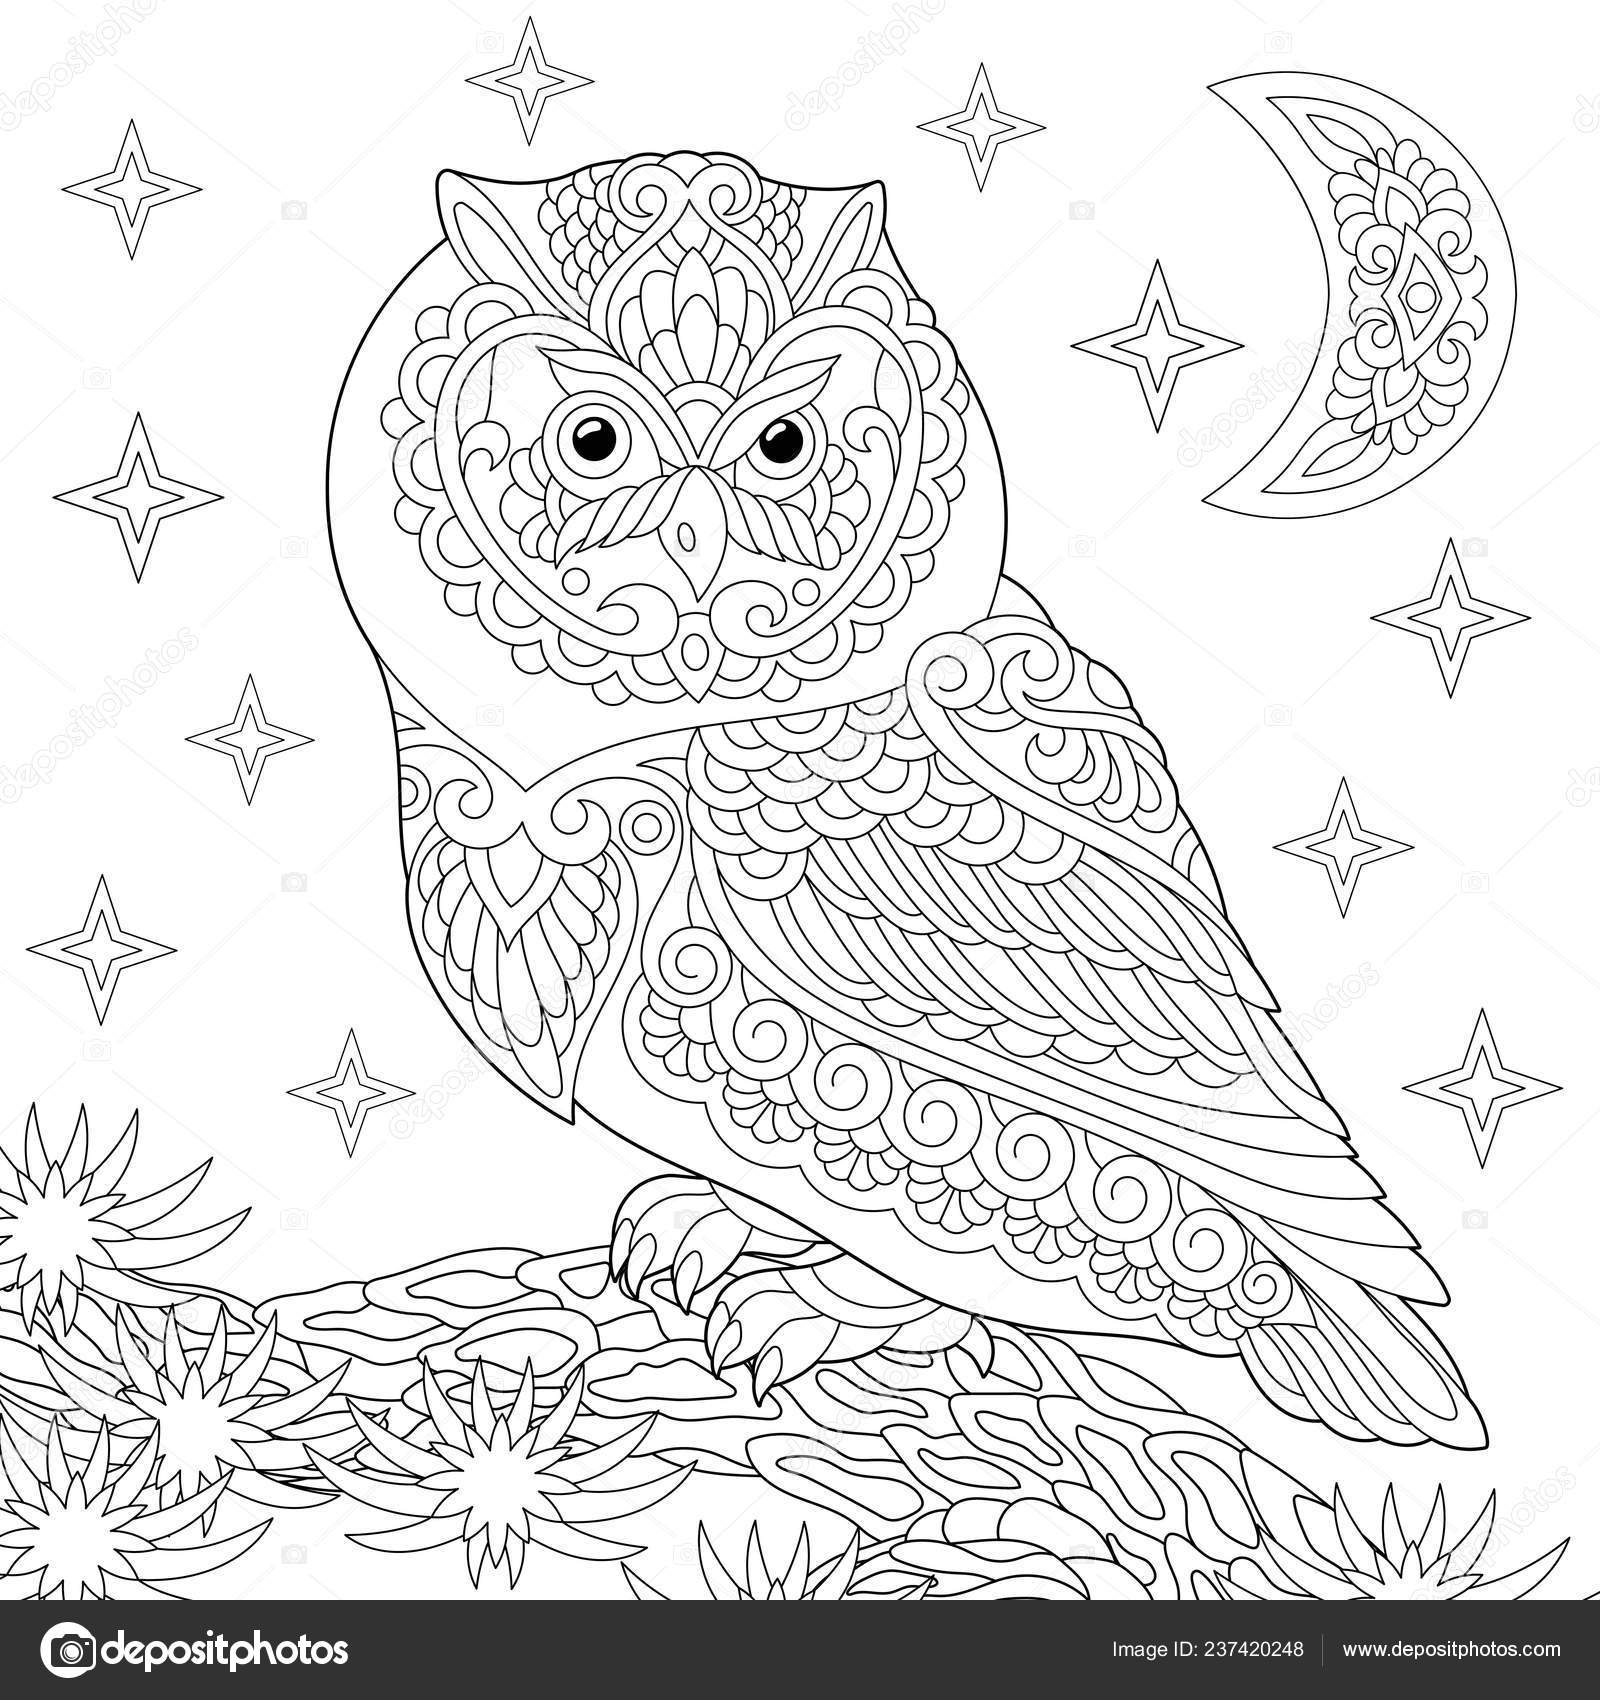 Lovely owl coloring page Stockvektoren, lizenzfreie Illustrationen ...